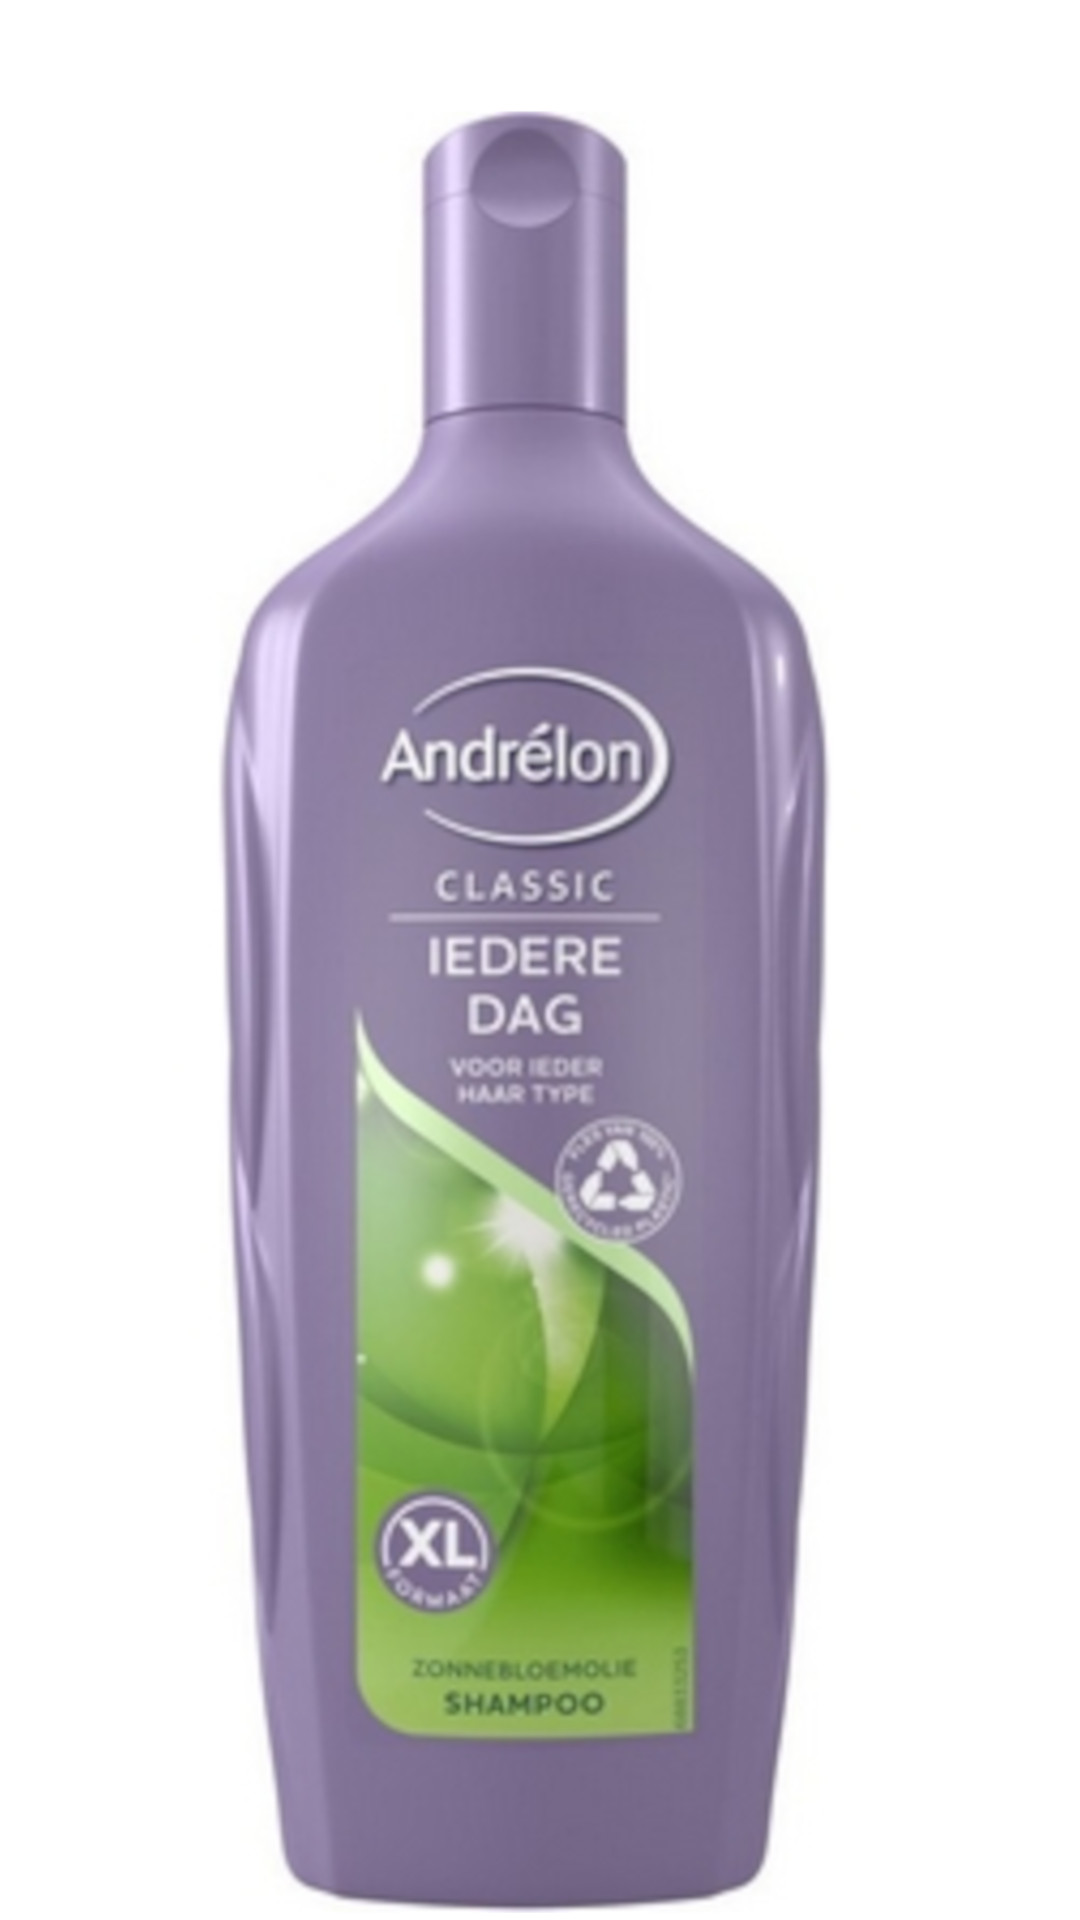 Andrelon Shampoo - Iedere Dag 450 ml - Plusjevoordeel